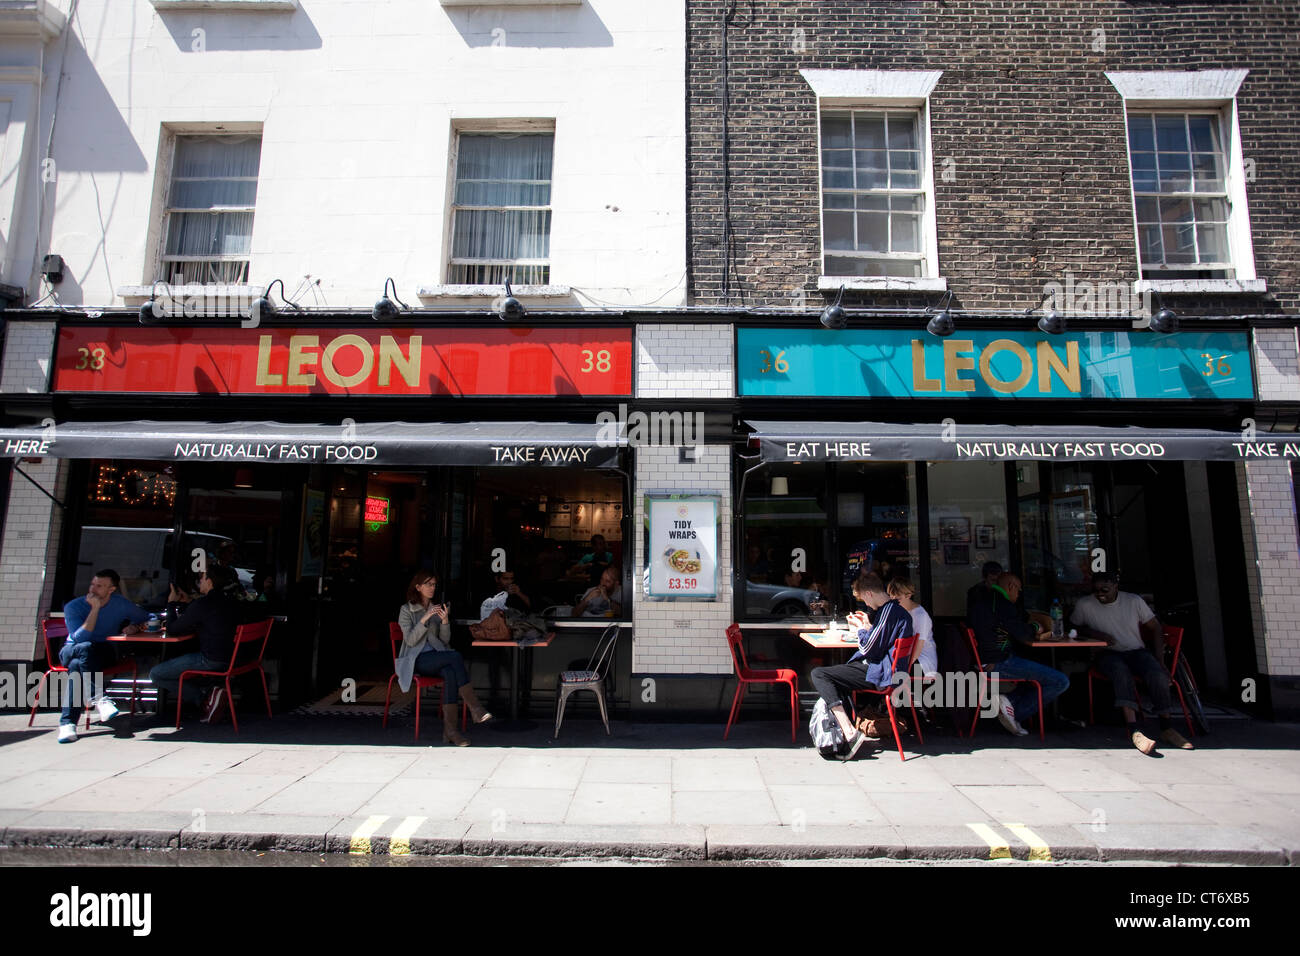 LEON fast food restaurant on Old Compton Street, Soho, London, England, UK Stock Photo